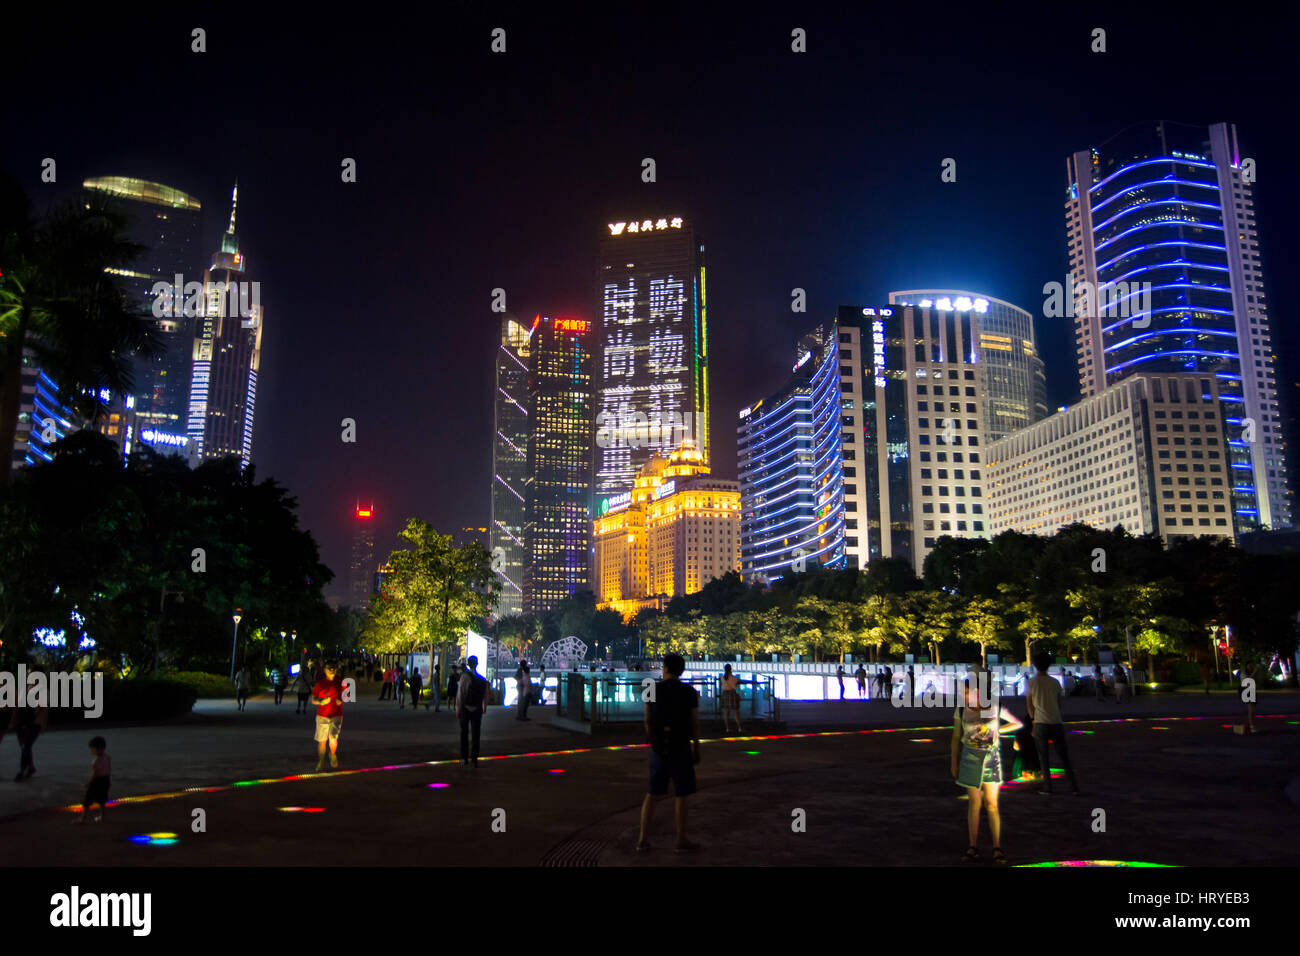 GUANGZHOU, CHINA - 13. September 2016: Guangzhou modernen zentralen Stadtteil mit Passanten in beleuchteten Pfad, Nachtansicht Stockfoto